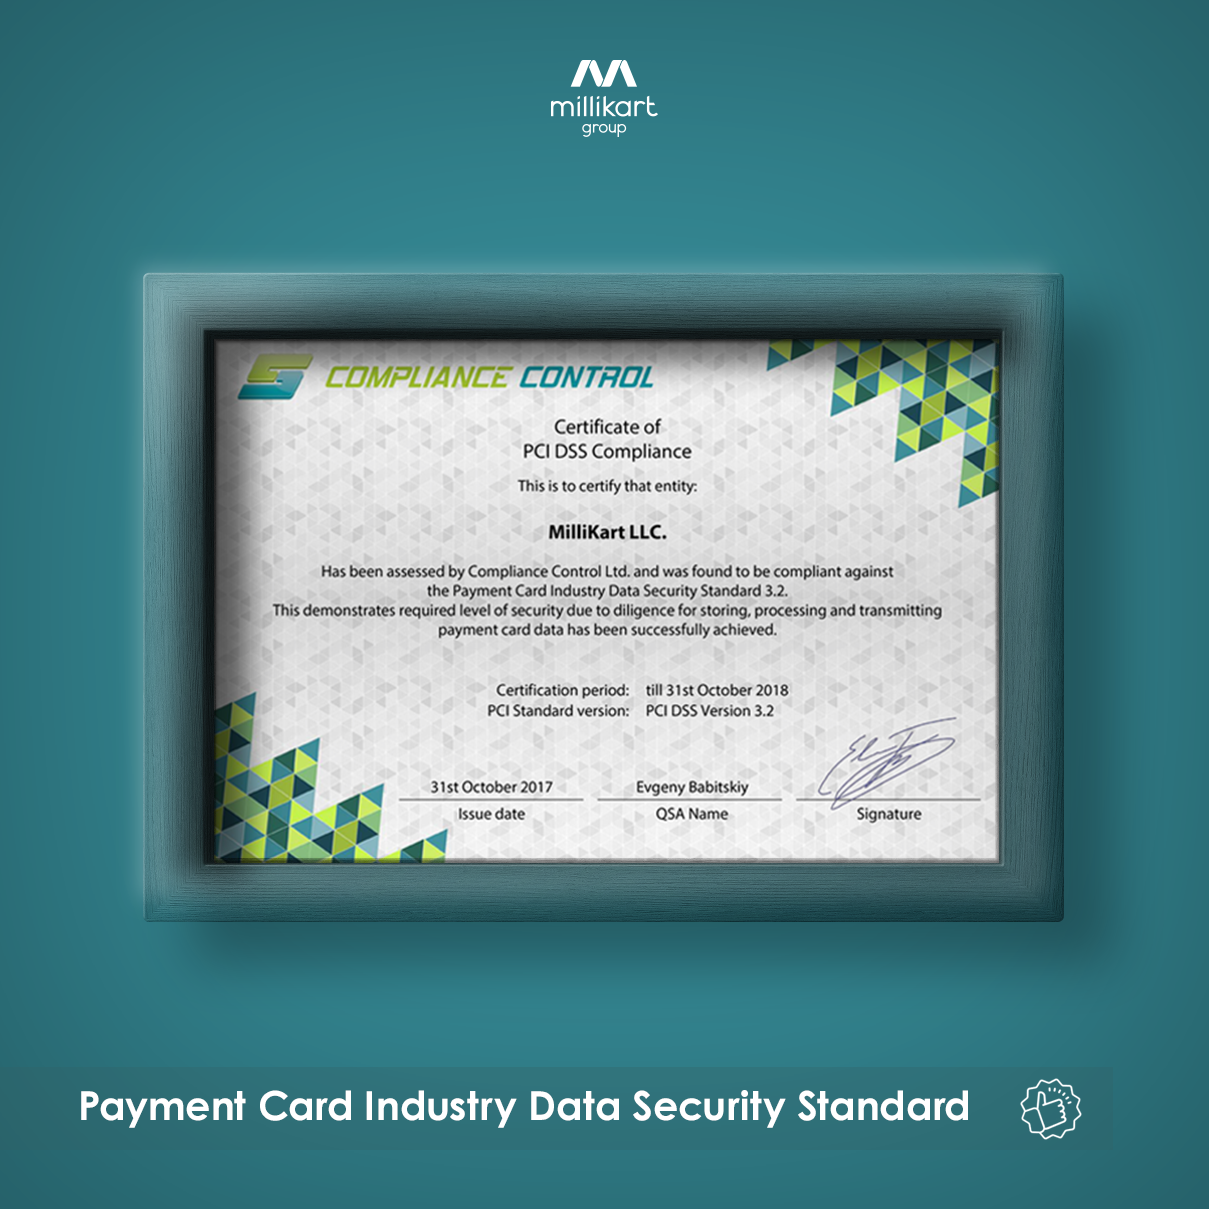 MİLLİKART (PCI DSS 3.2) PAYMENT CARD INDUSTRY DATA SECURİTY STANDARDS ÜZRƏ SERTİFİKASİYADAN KEÇMİŞDİR